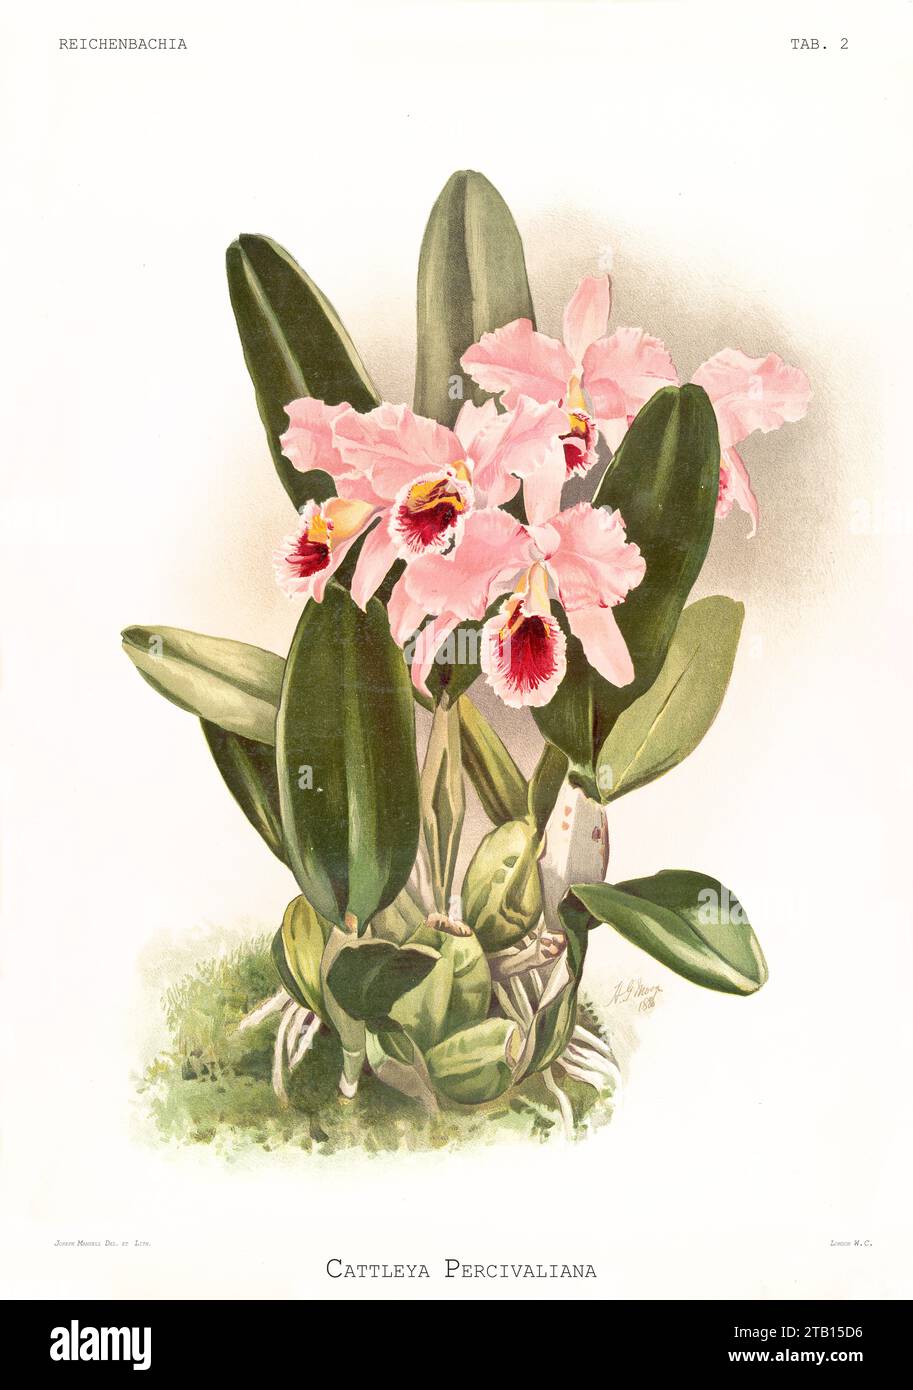 Old illustration of Christmas Orchid (Cattleya percivaliana). Reichenbachia, by F. Sander. St. Albans, UK, 1888 - 1894 Stock Photo